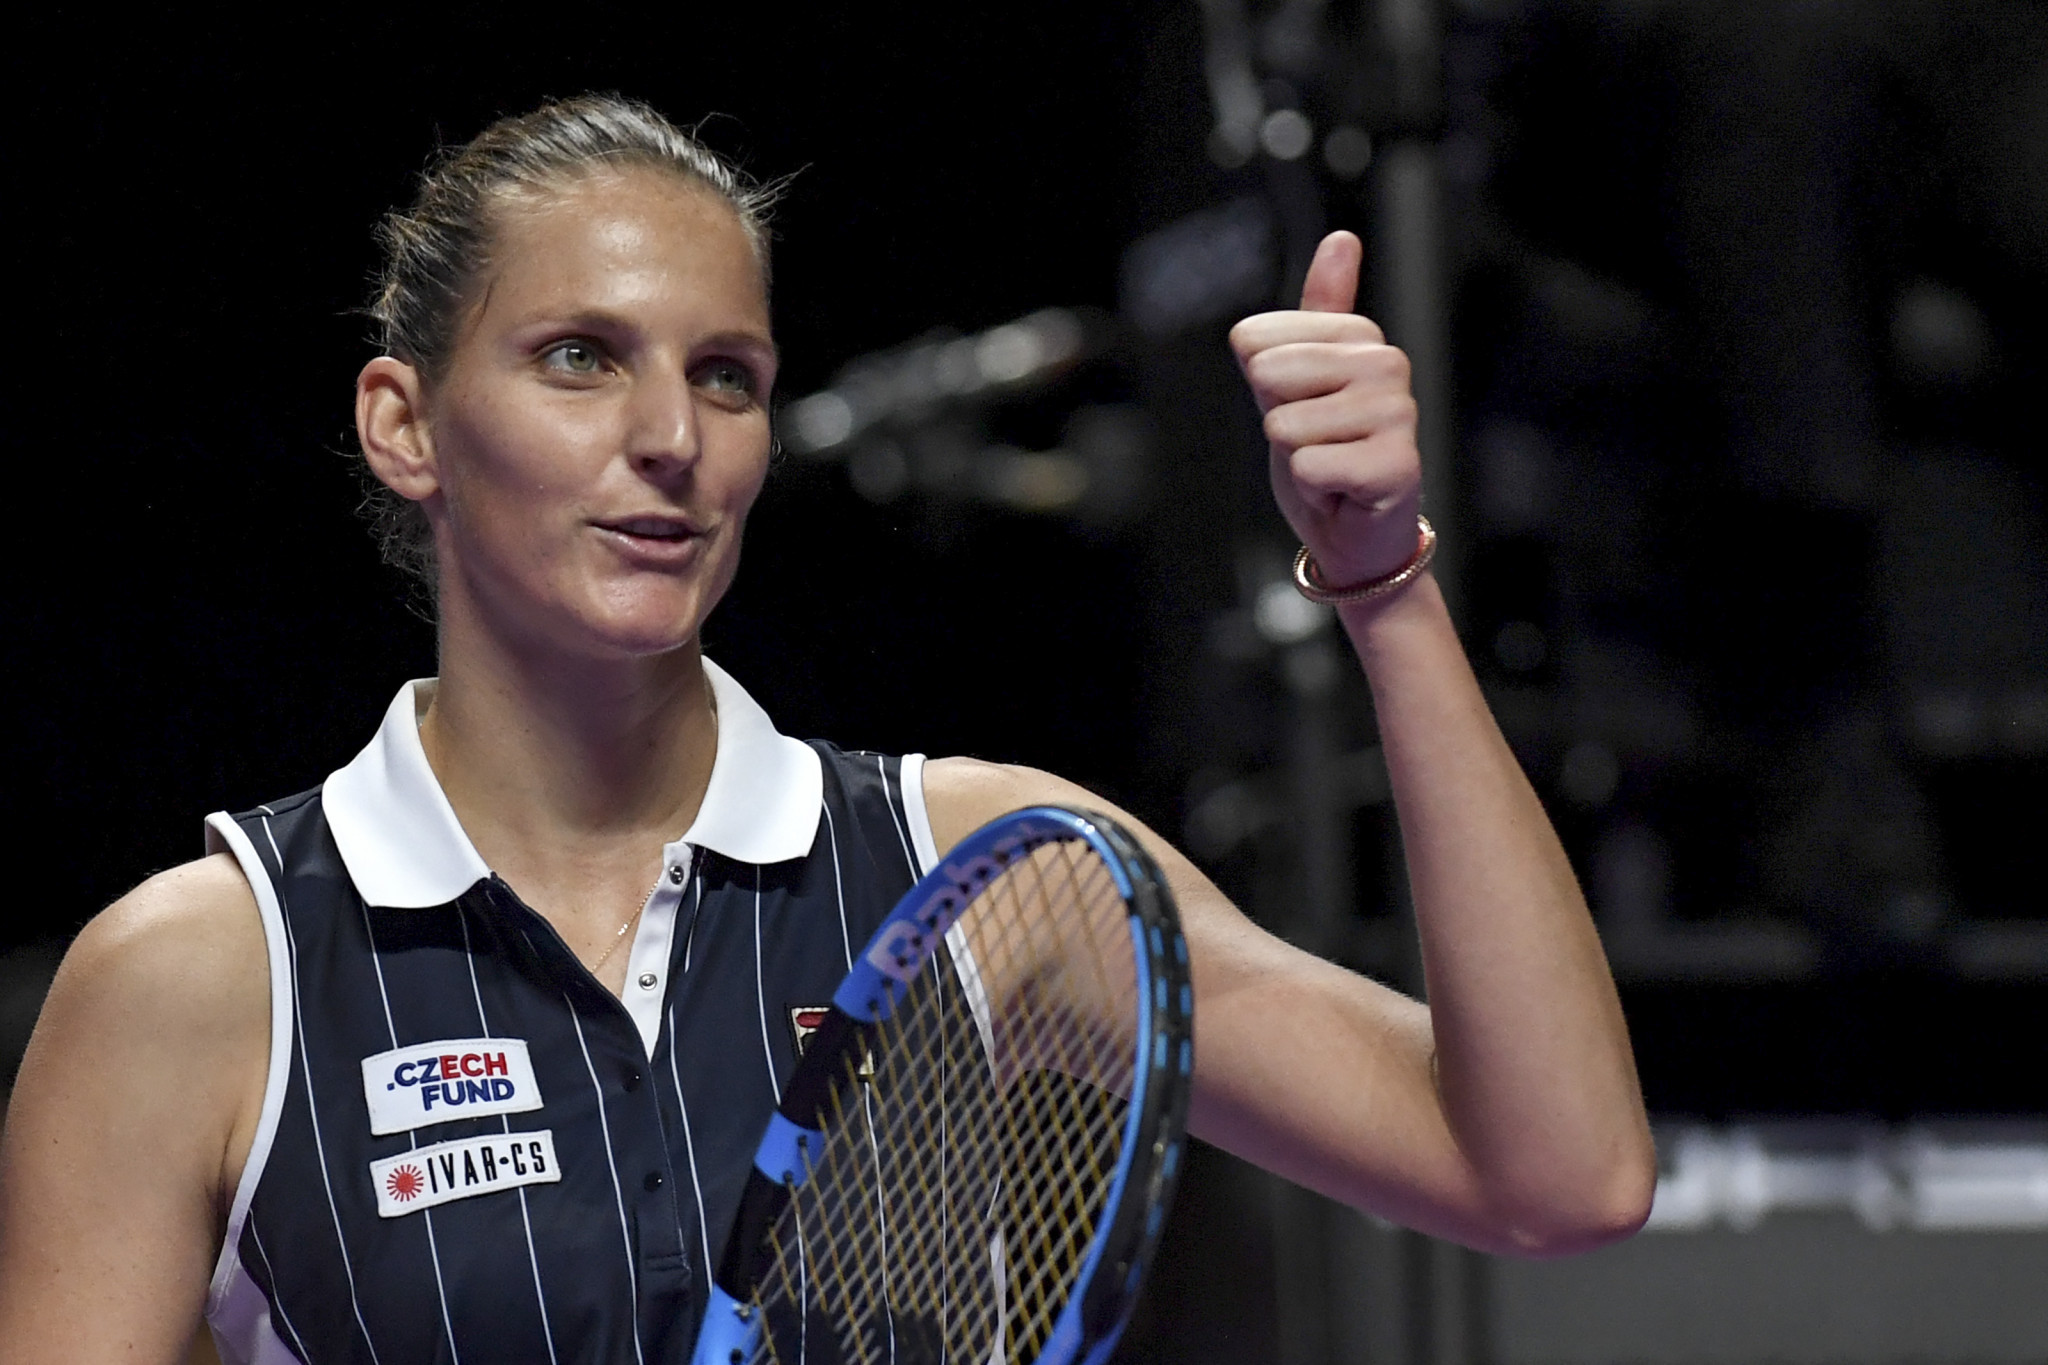 Plíšková beats Halep to complete last-four at WTA Finals